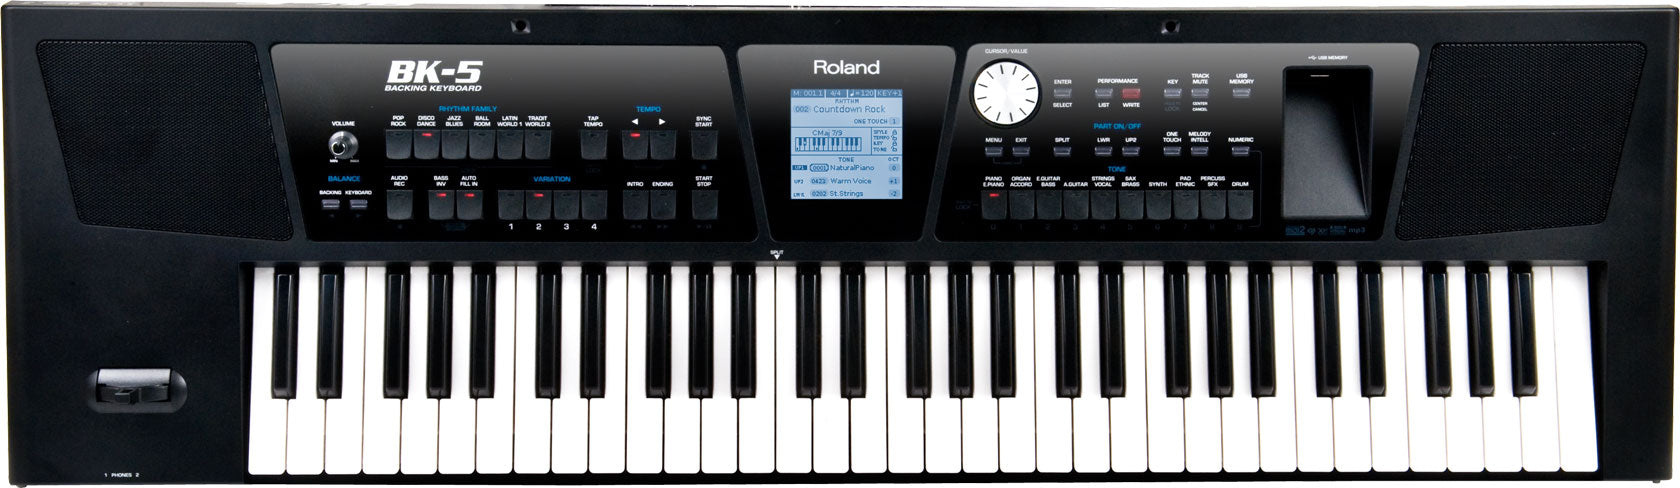 Roland BK-5 61-Keys Backing Keyboard with FREE Shipping (BK5 BK 5), ROLAND, KEYBOARD, roland-keyboard-bk-5, ZOSO MUSIC SDN BHD